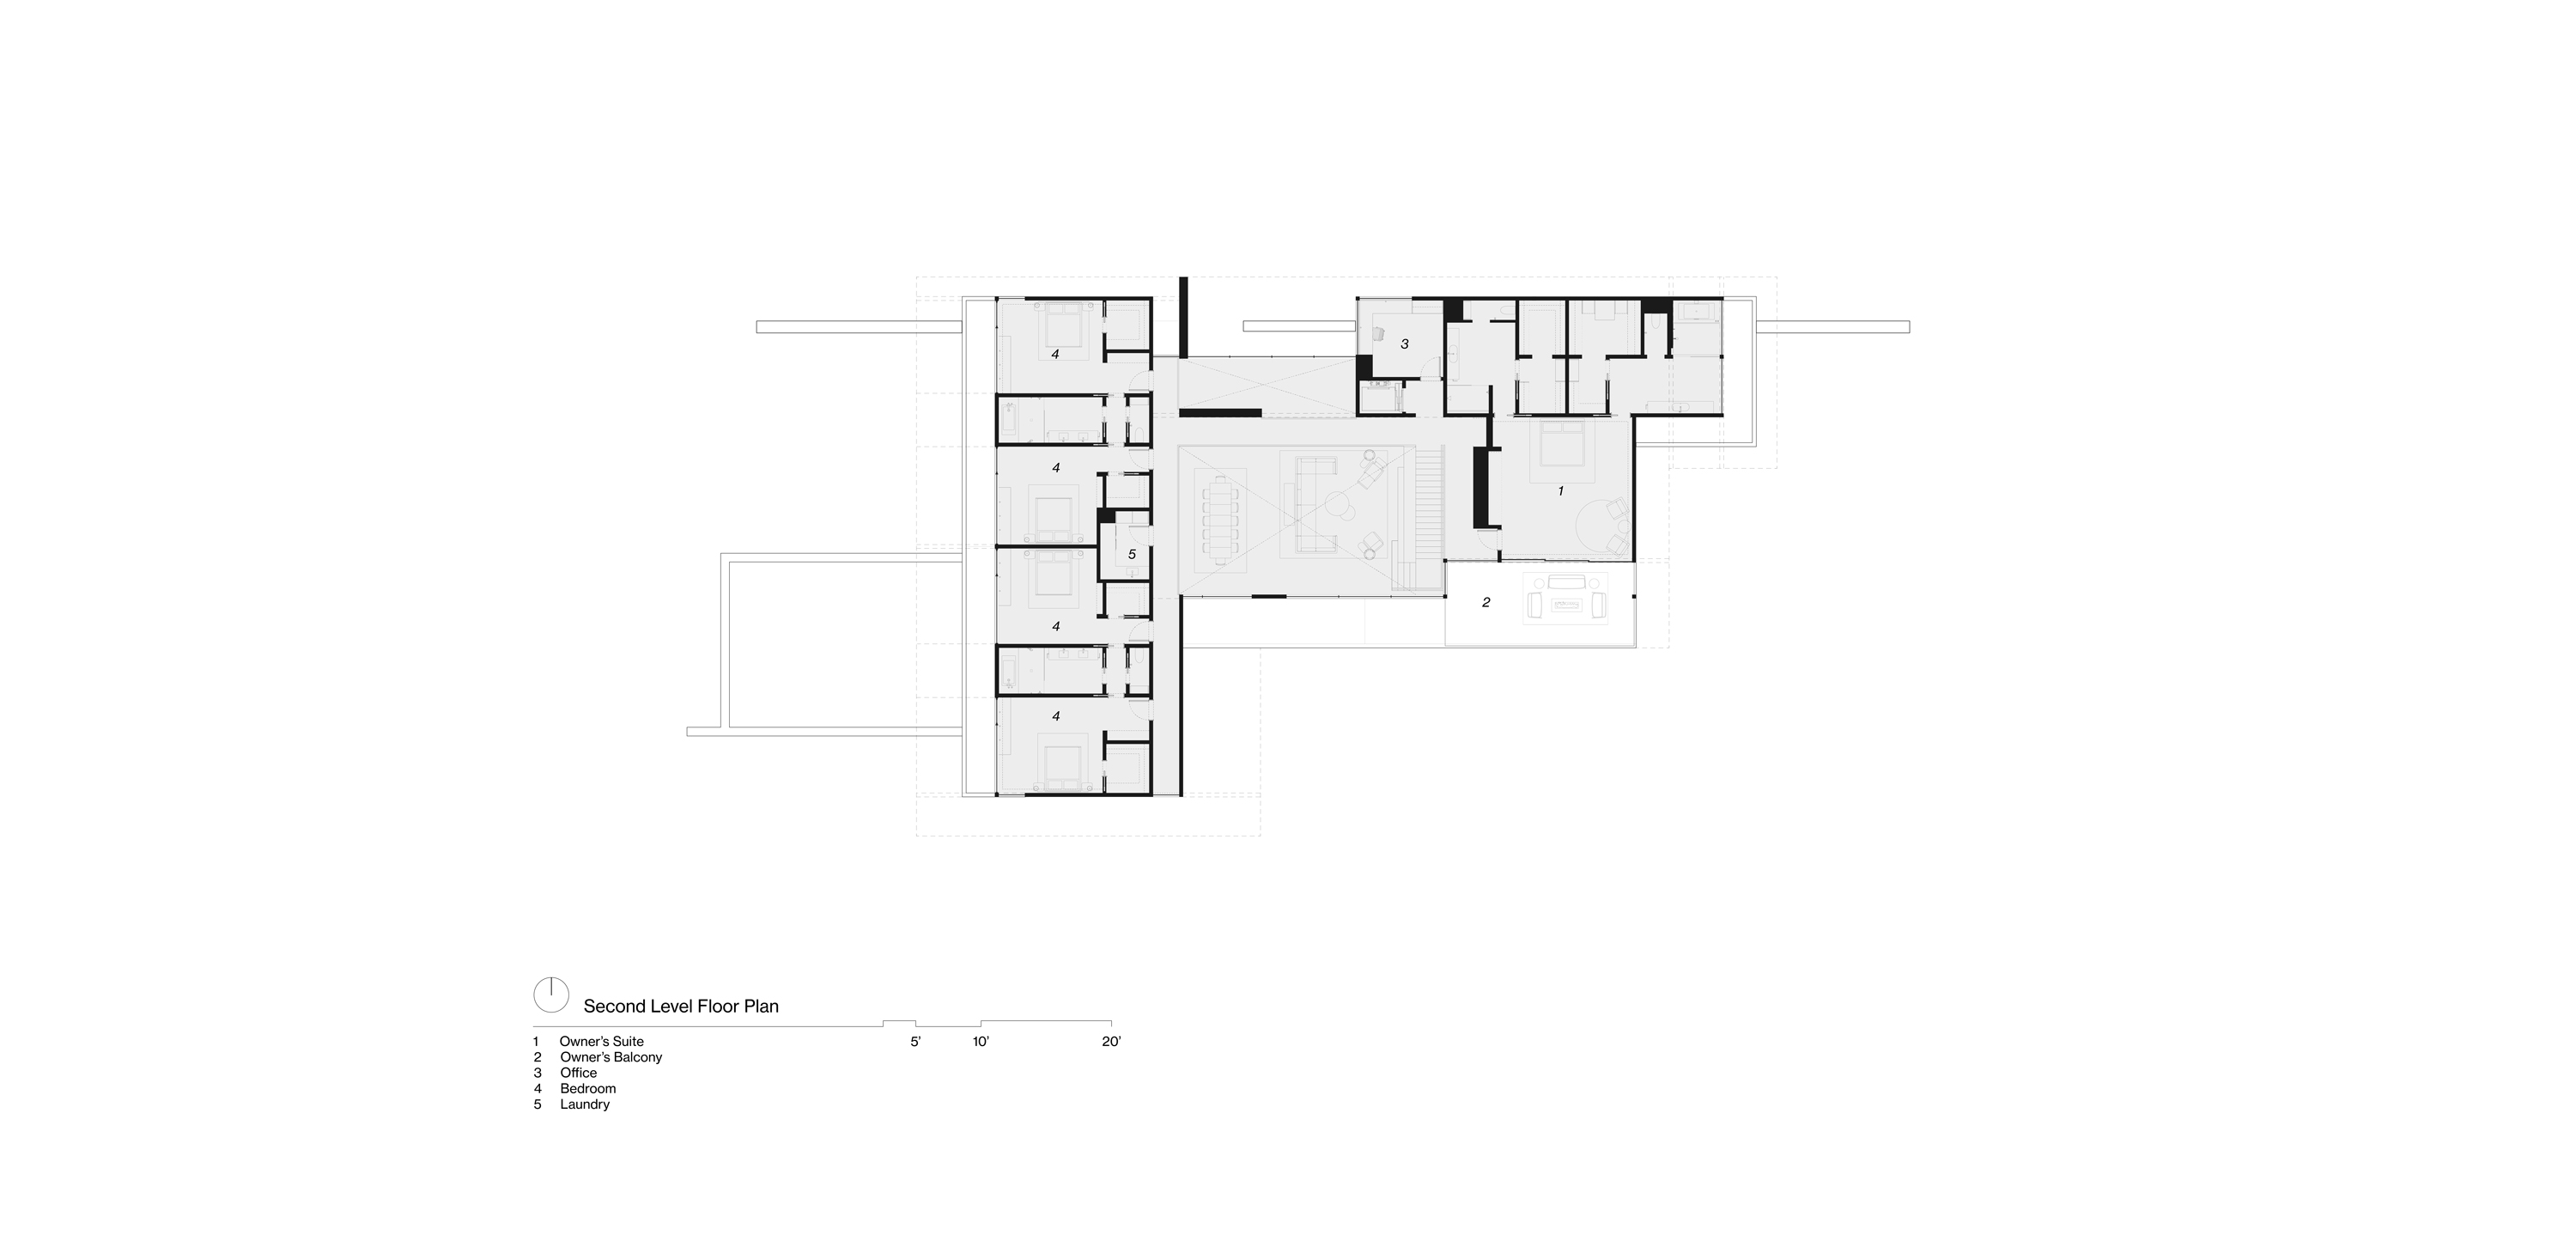 Second floor plan of Kazoku House by Specht Novak Architects.